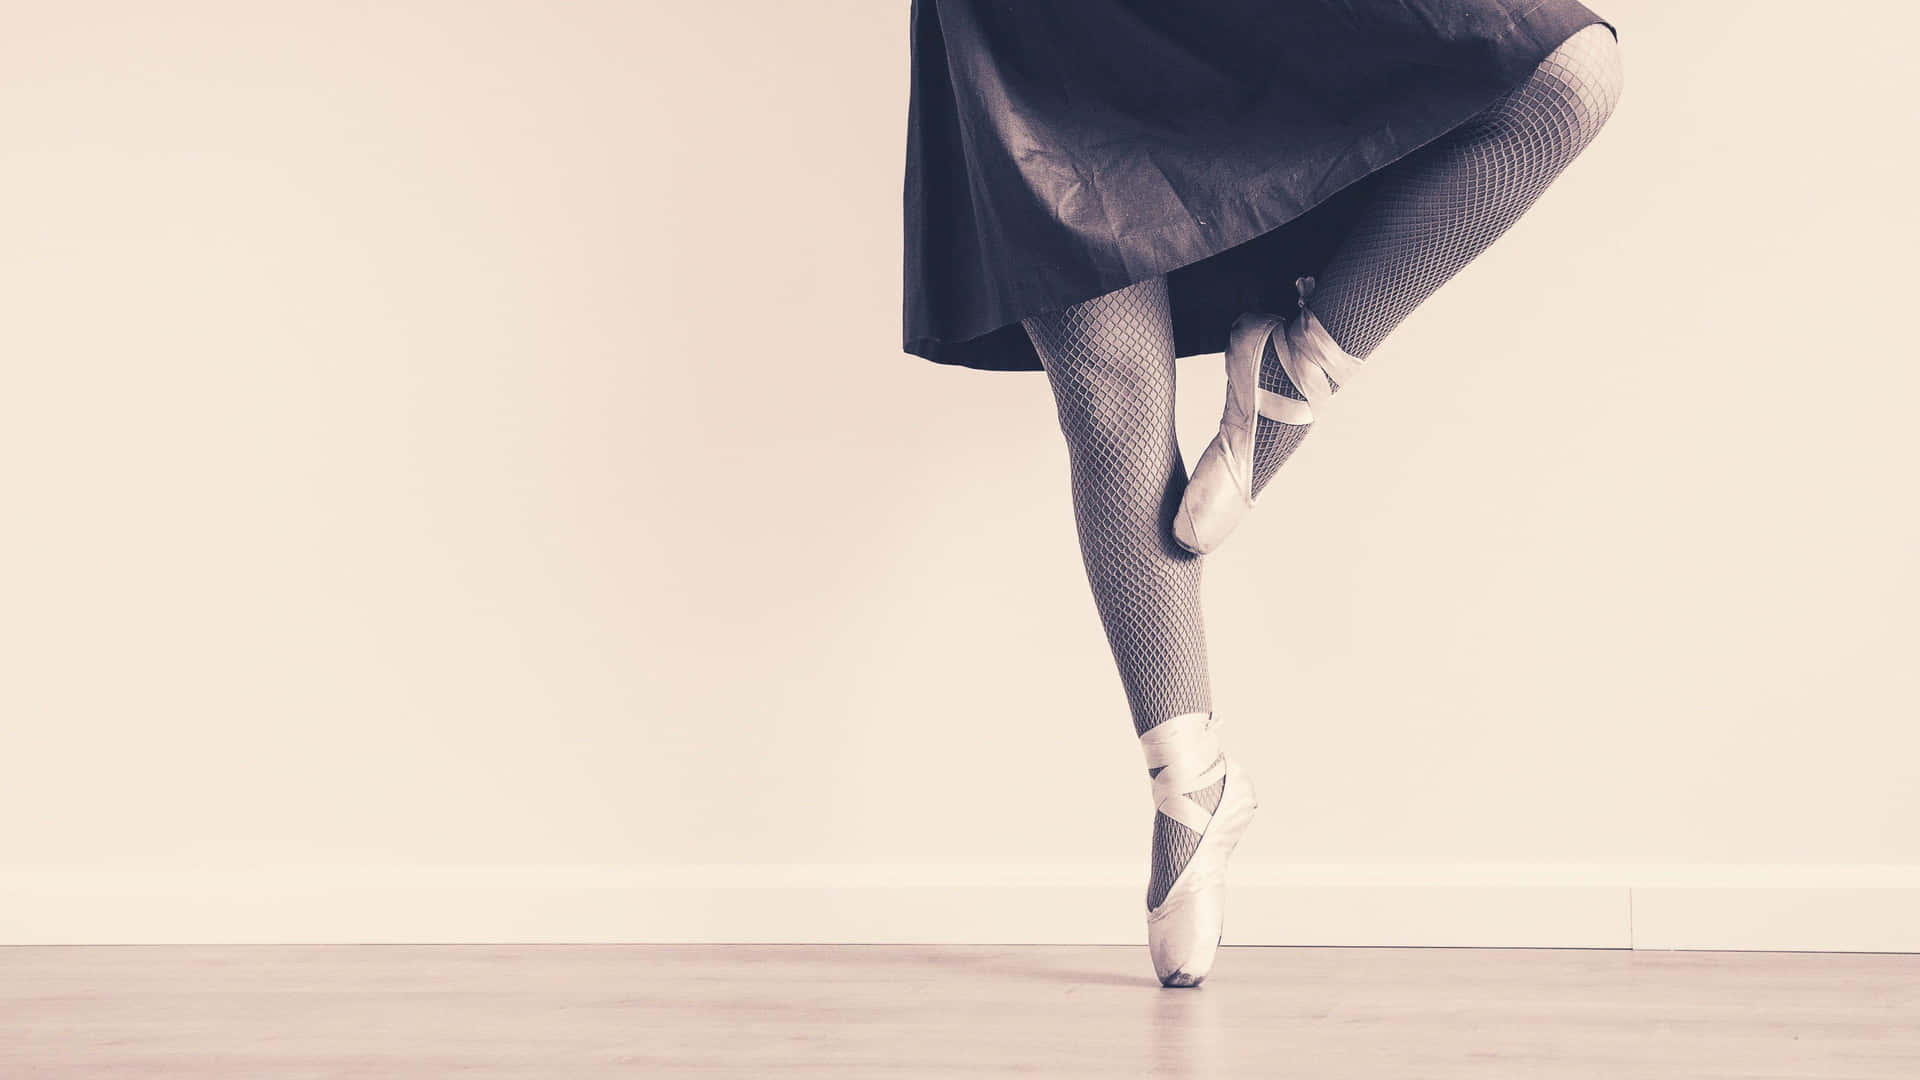 Balancing joy and discipline, a young ballerina trains her art.